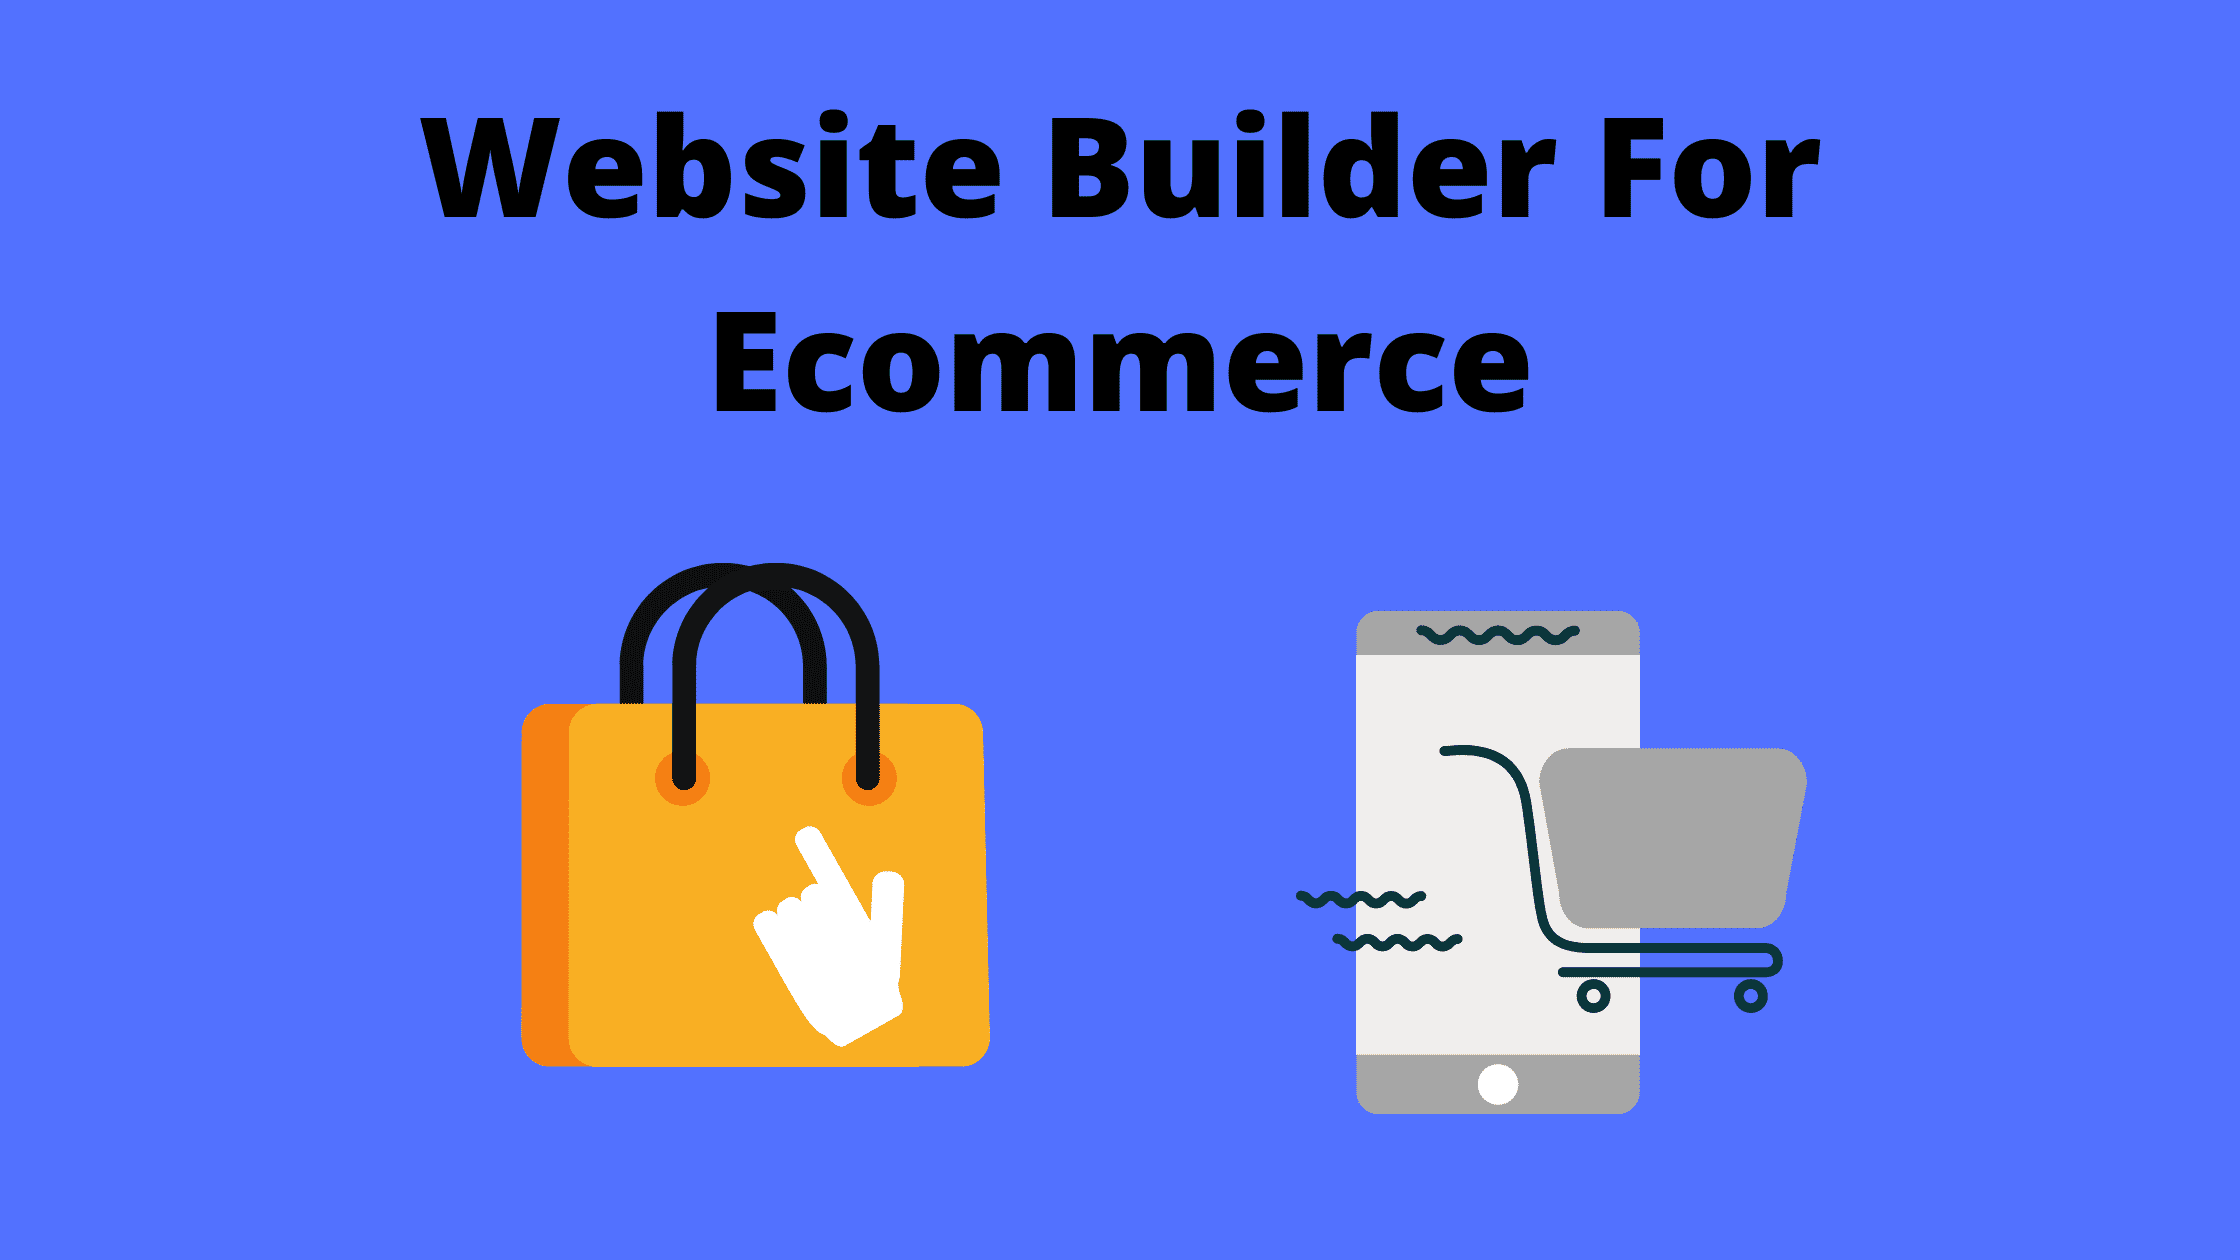 Website Builder For Ecommerce